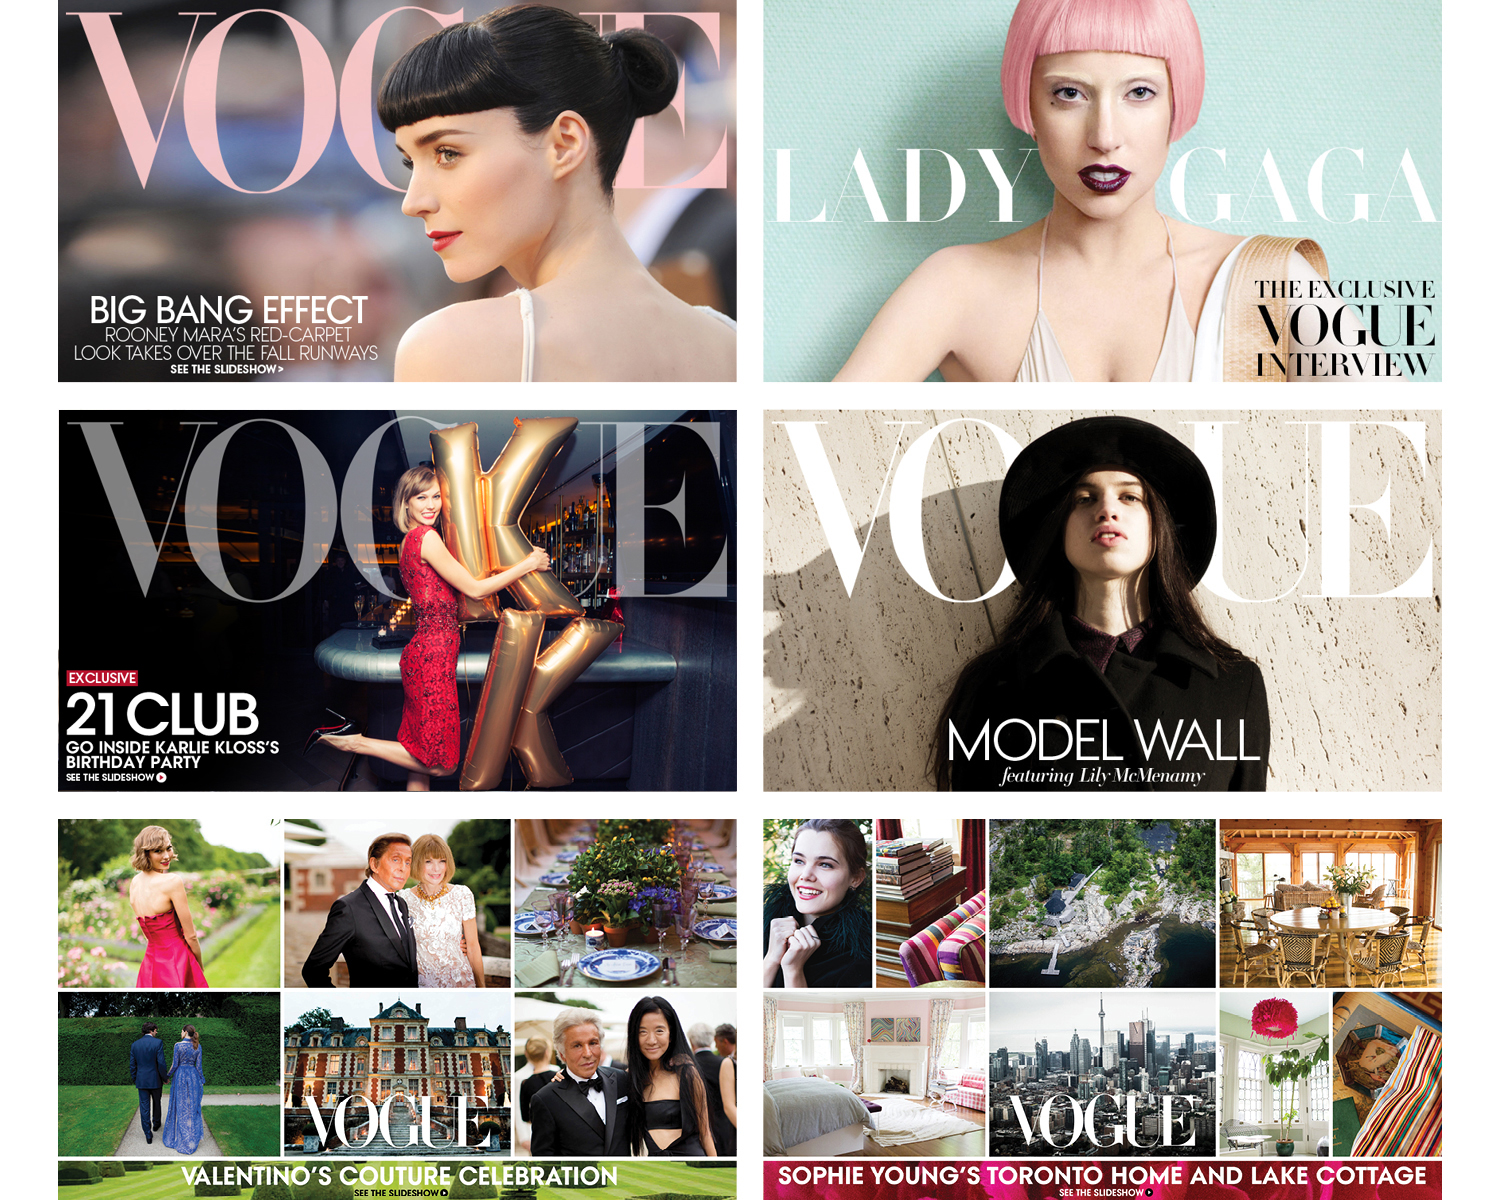  Vogue.com "Hero" Banners  (Conceptualized full-width logo placement)&nbsp;   2011-2013   VOGUE.COM  